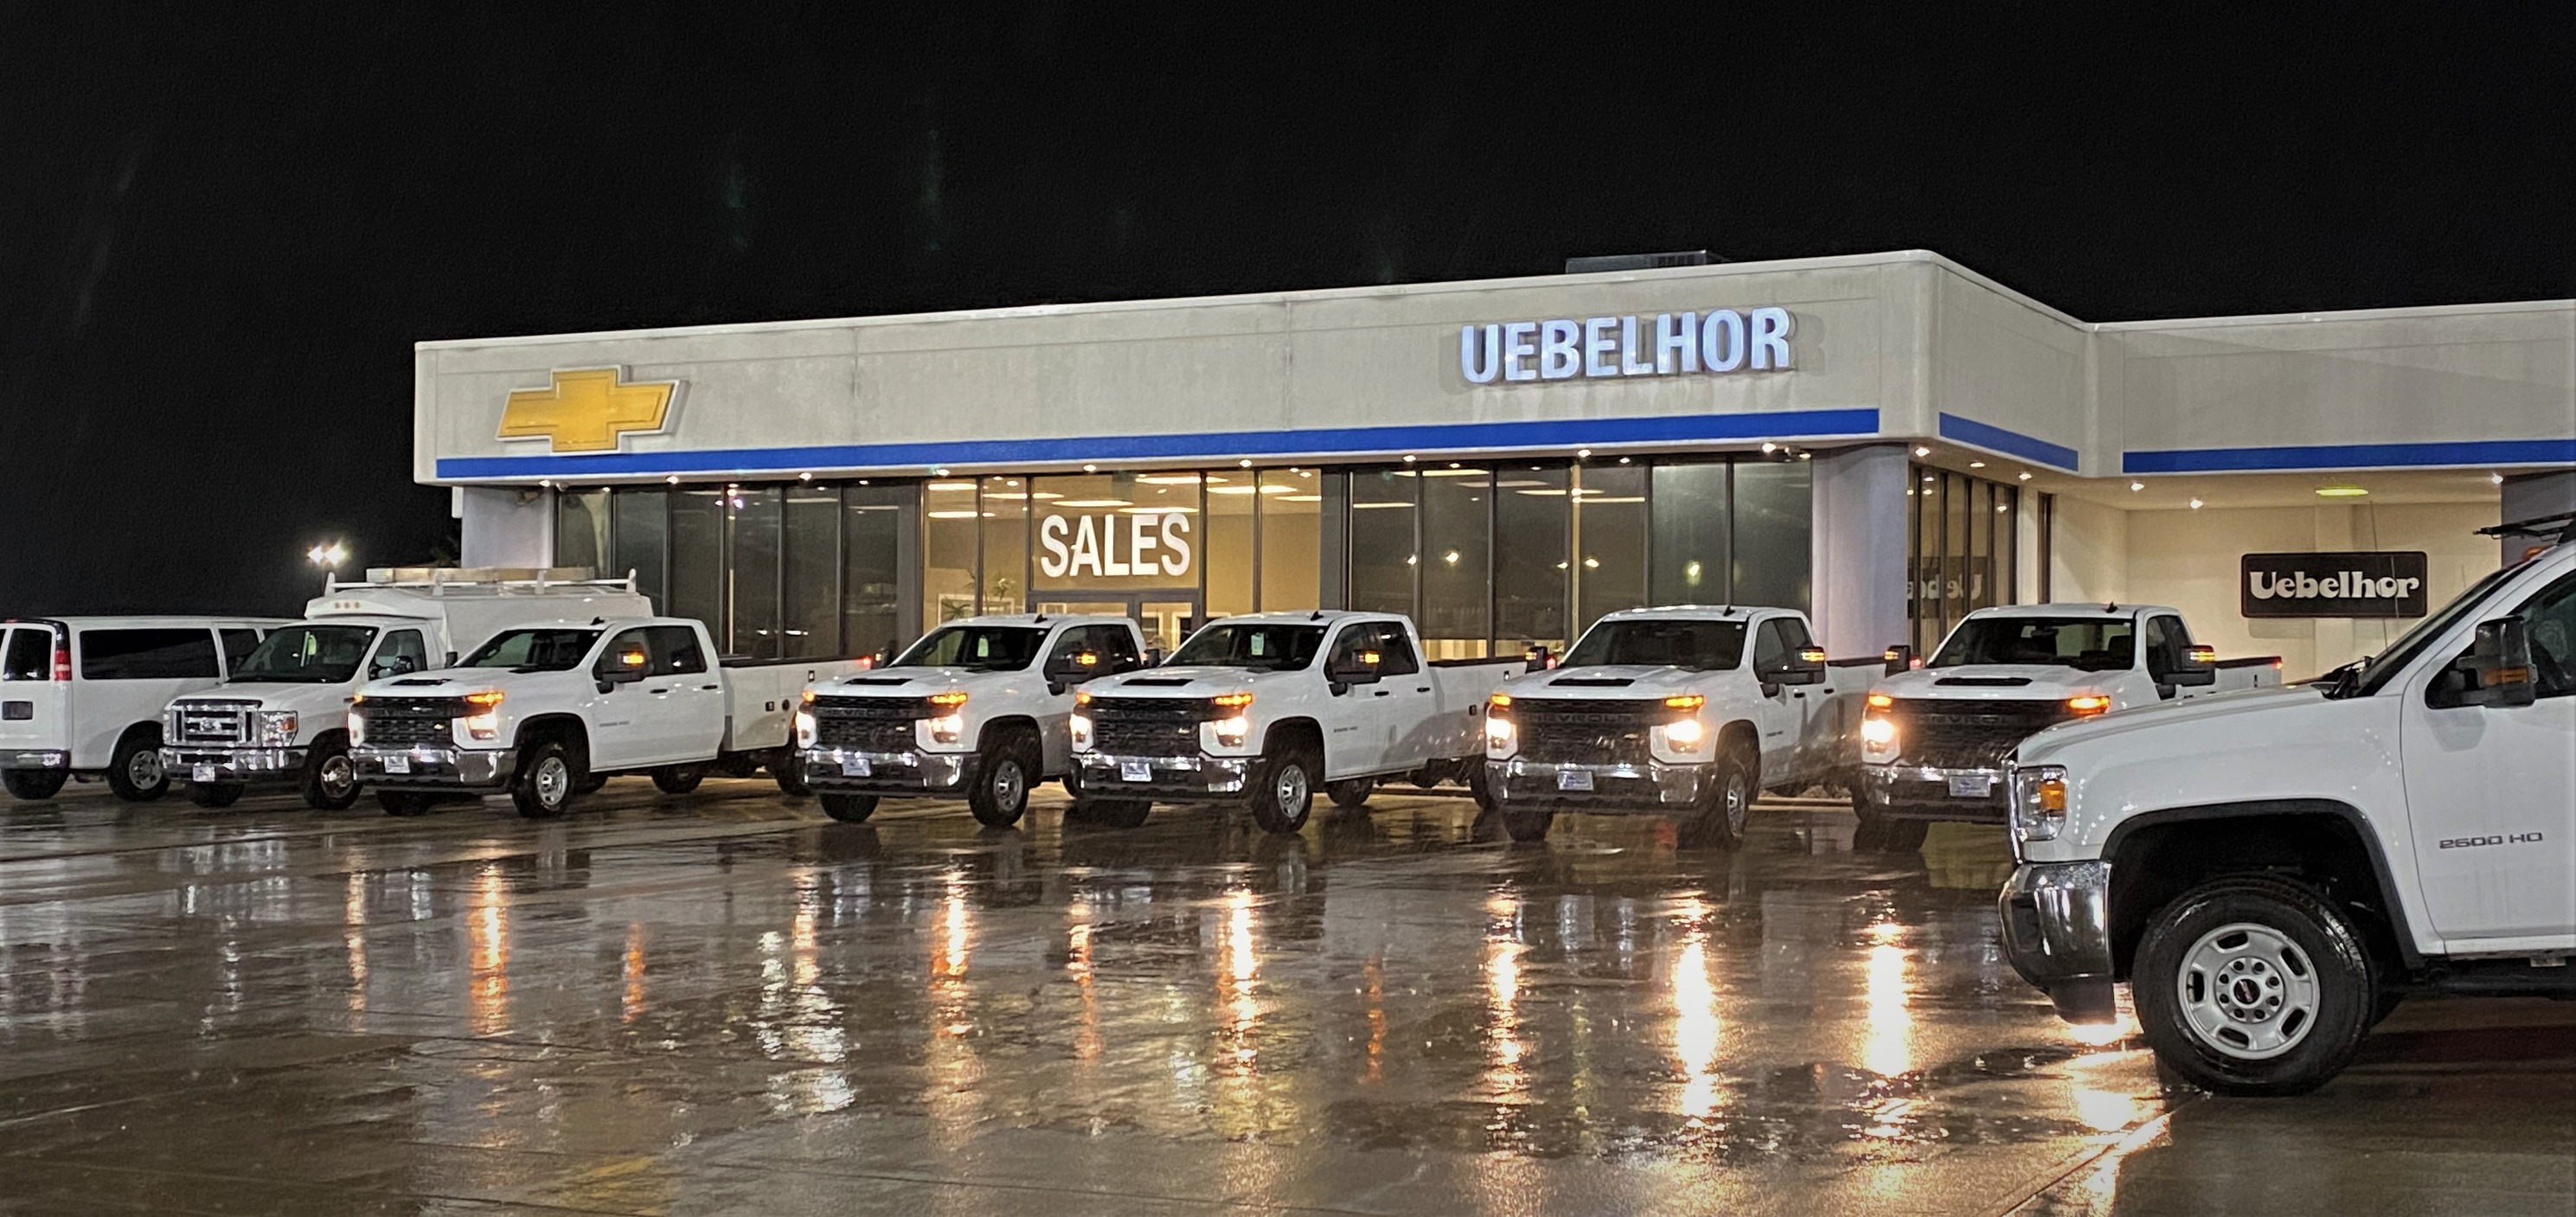 Uebelhor & Sons Commercial Vehicles